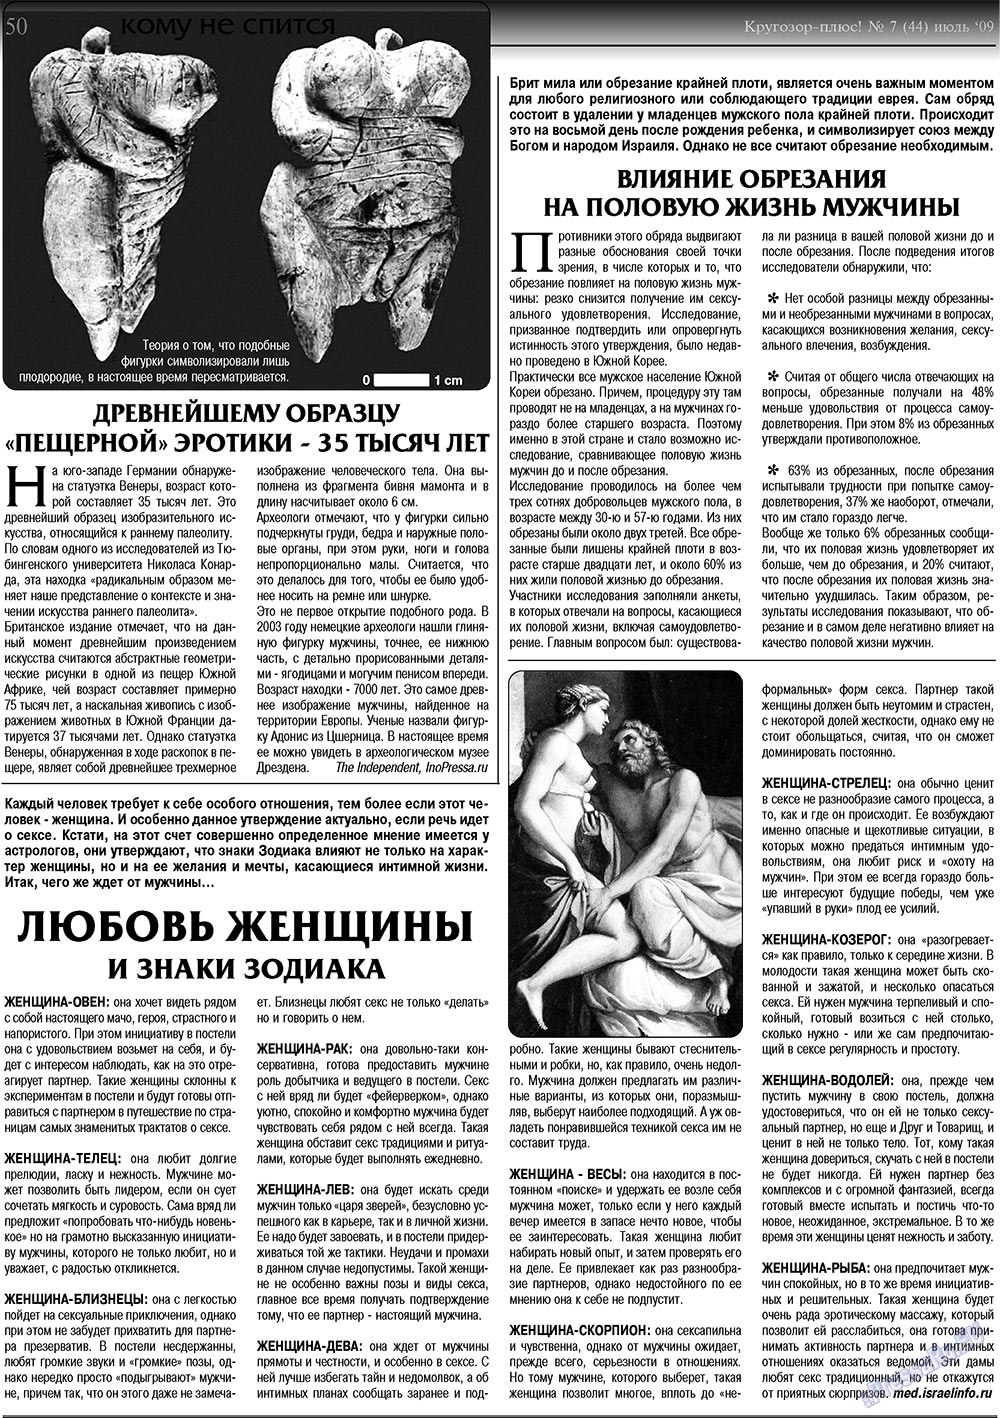 Кругозор плюс! (газета). 2009 год, номер 7, стр. 50